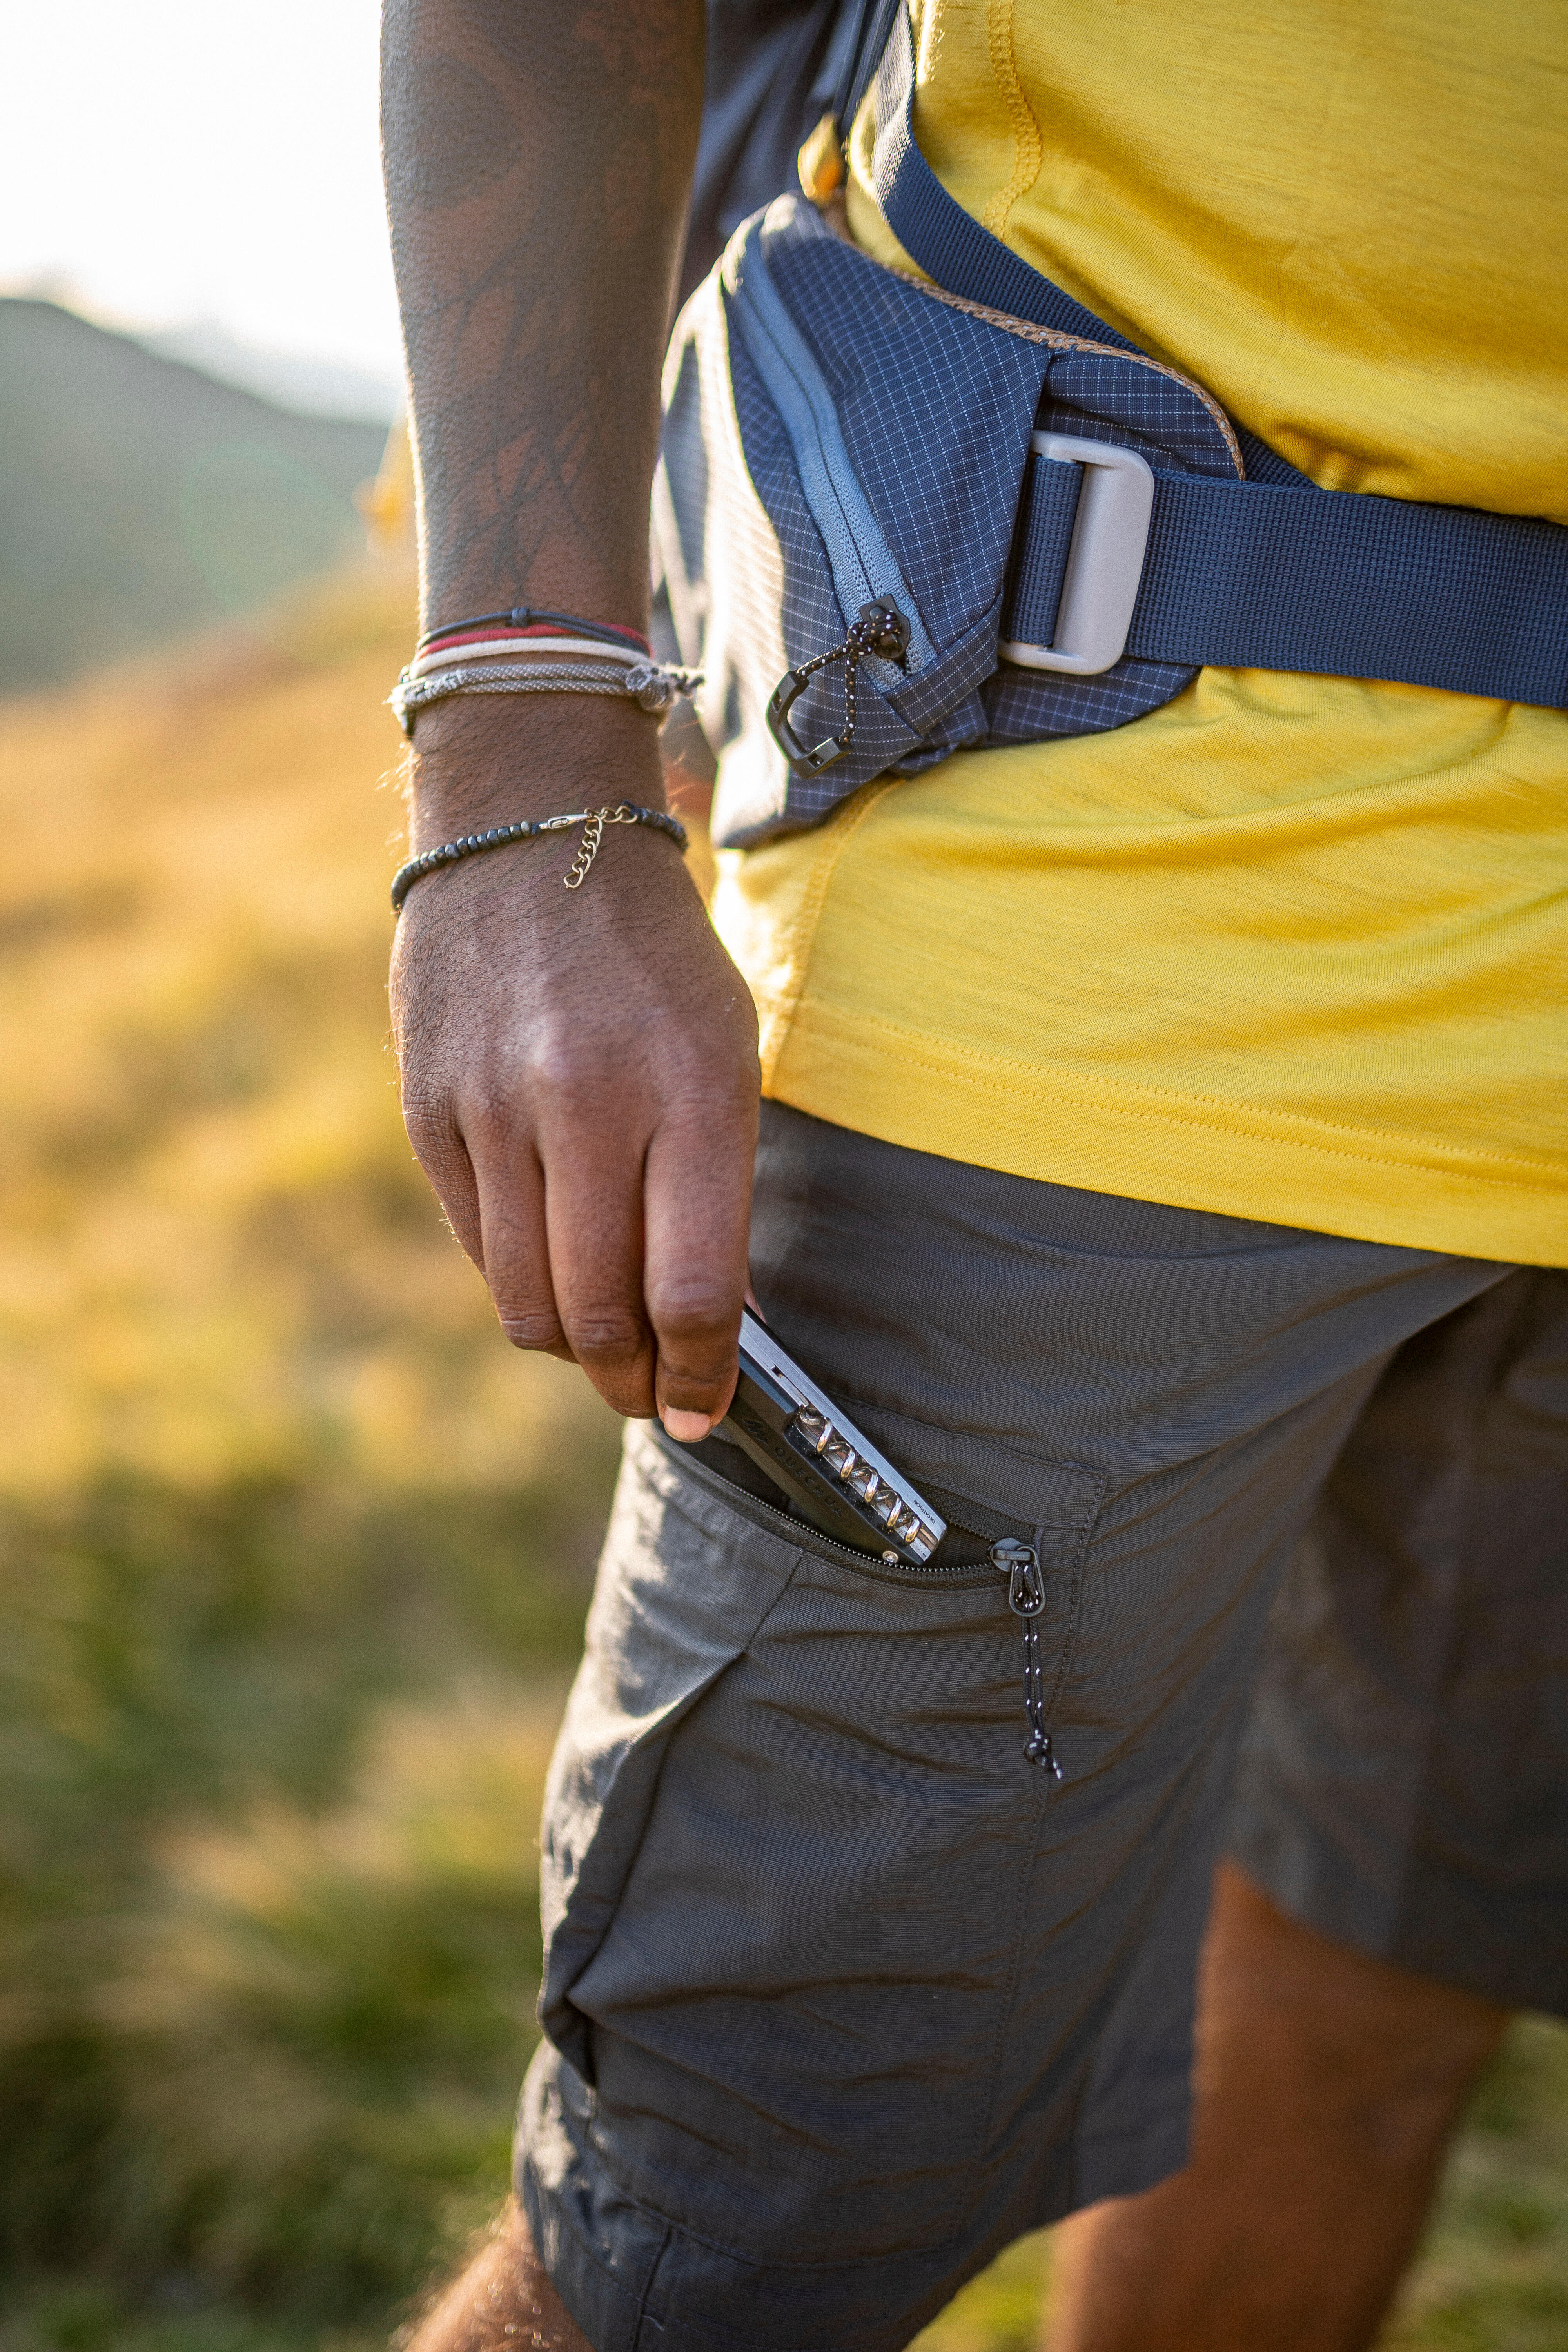 Men's Hiking Shorts - MT 500 - Carbon grey, Black - Forclaz